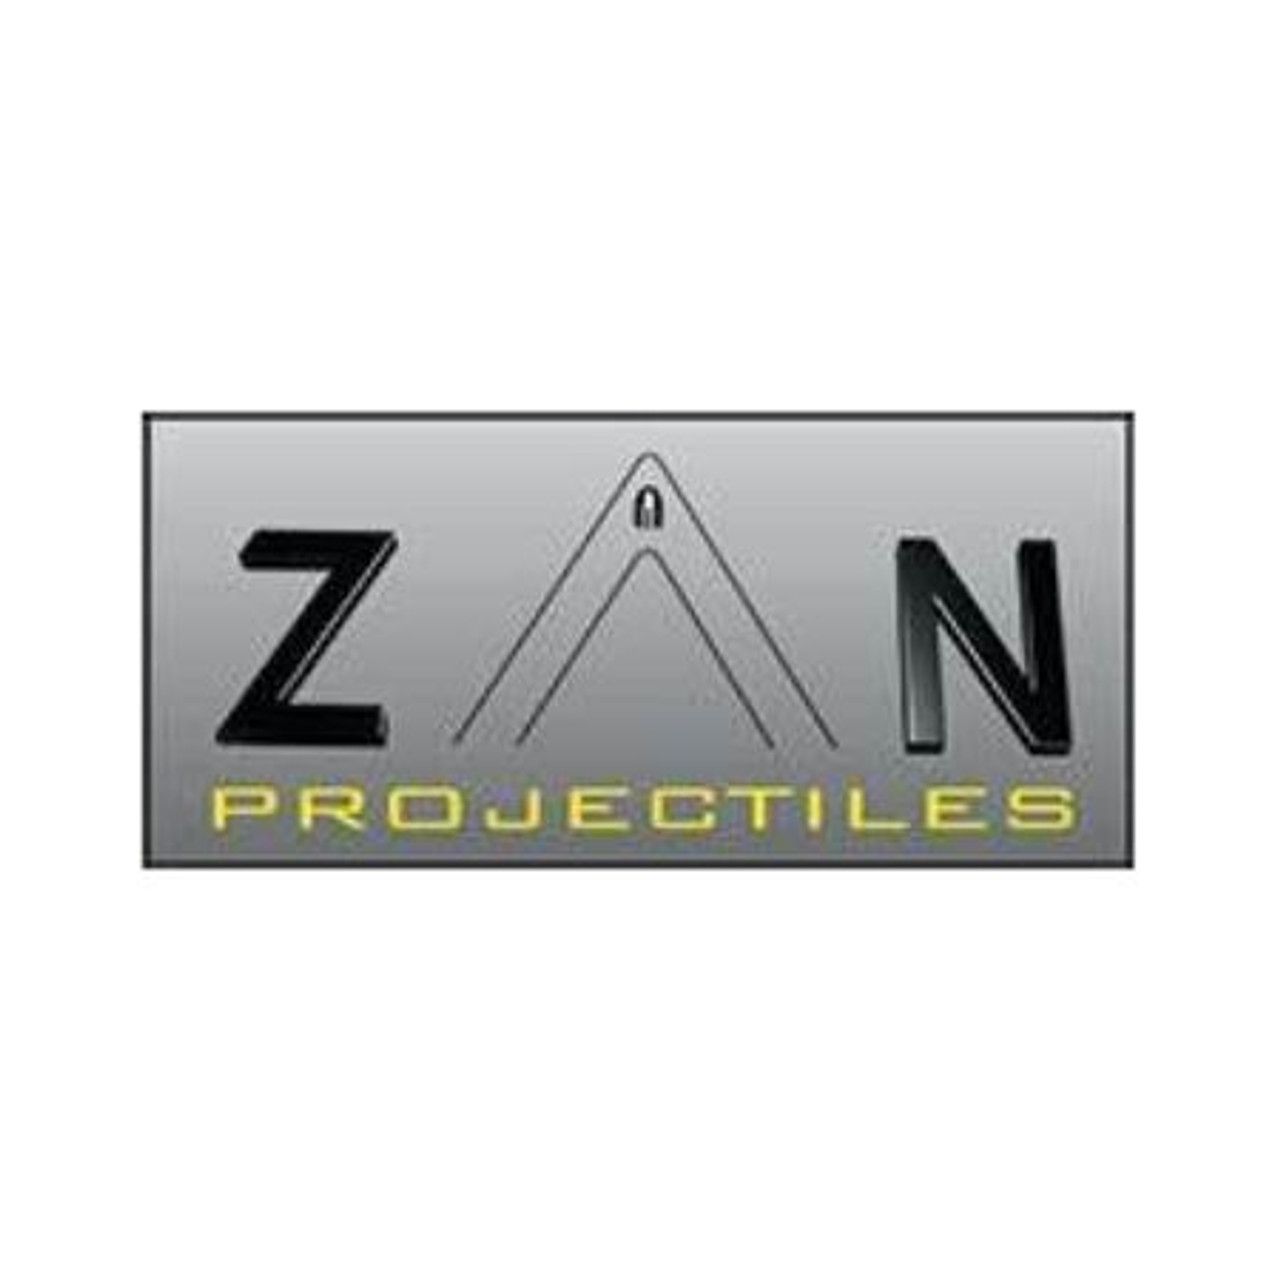 ZAN Projectiles Slugs .250 26.5gr Hollow Point Pellets for Air Rifles 200pk